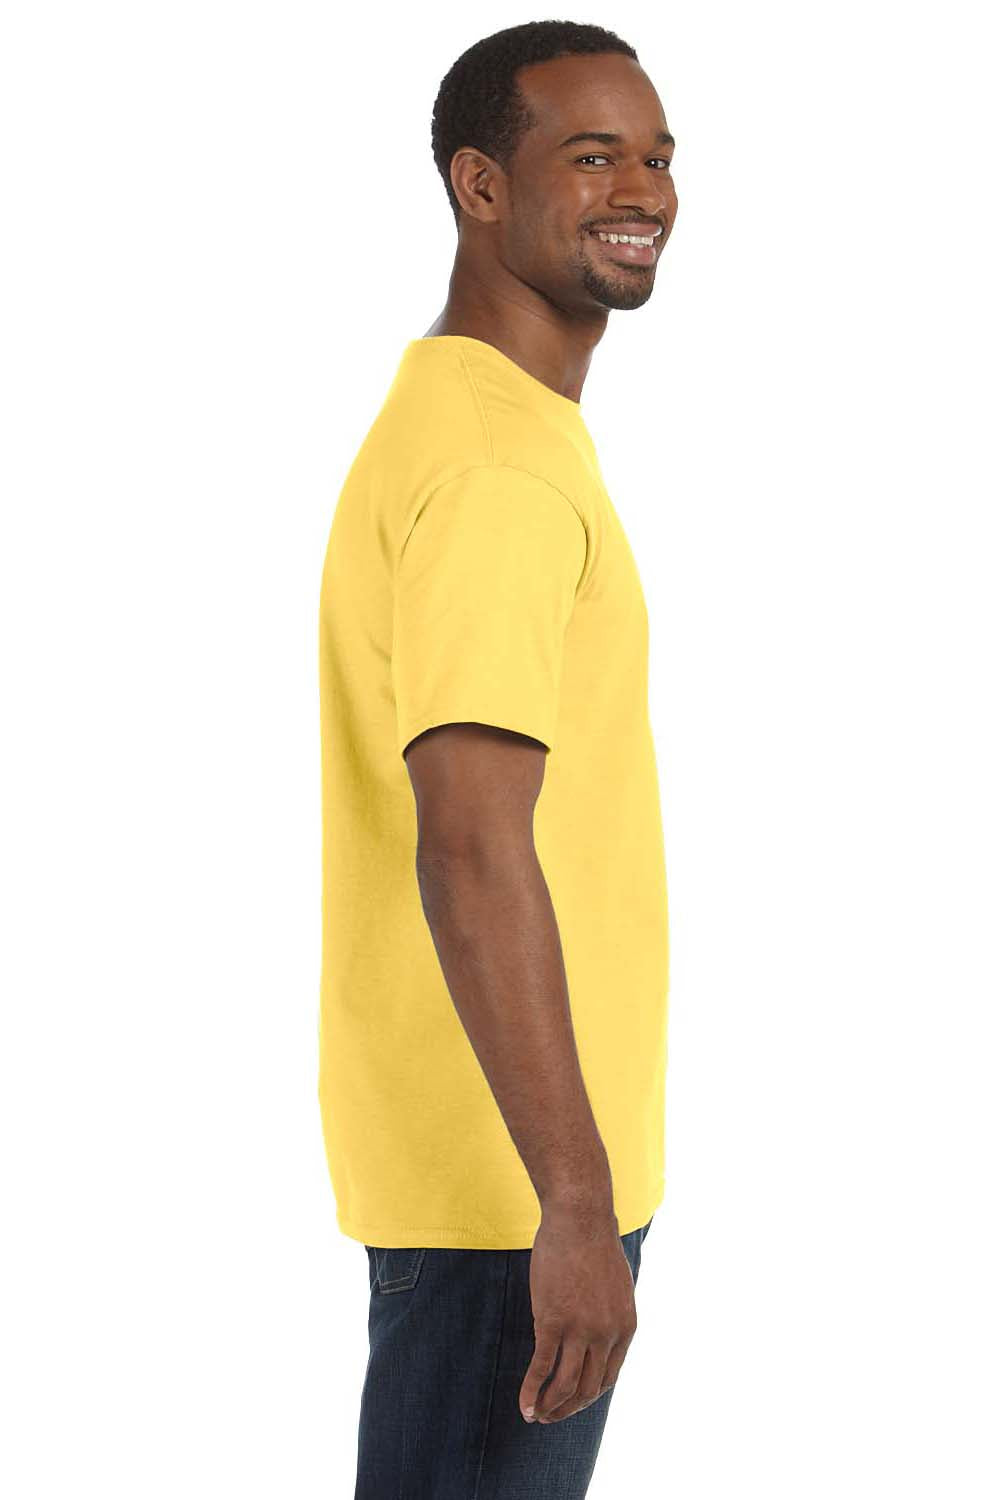 Hanes 5250T Mens ComfortSoft Short Sleeve Crewneck T-Shirt Daffodil Yellow Side